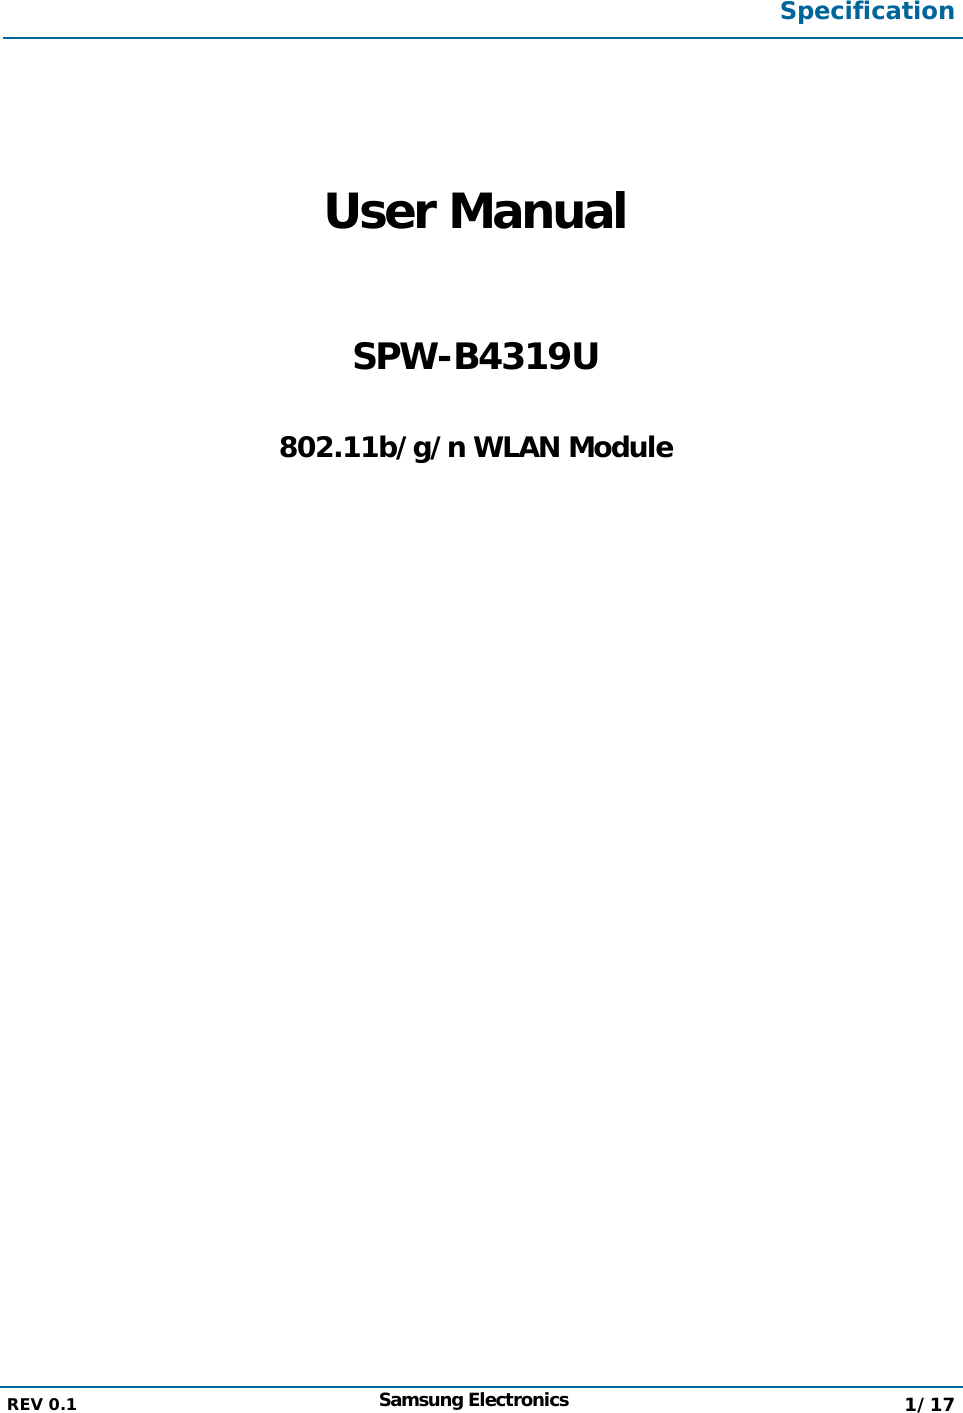  Specification  REV 0.1  Samsung Electronics  1/17    User Manual  SPW-B4319U  802.11b/g/n WLAN Module          